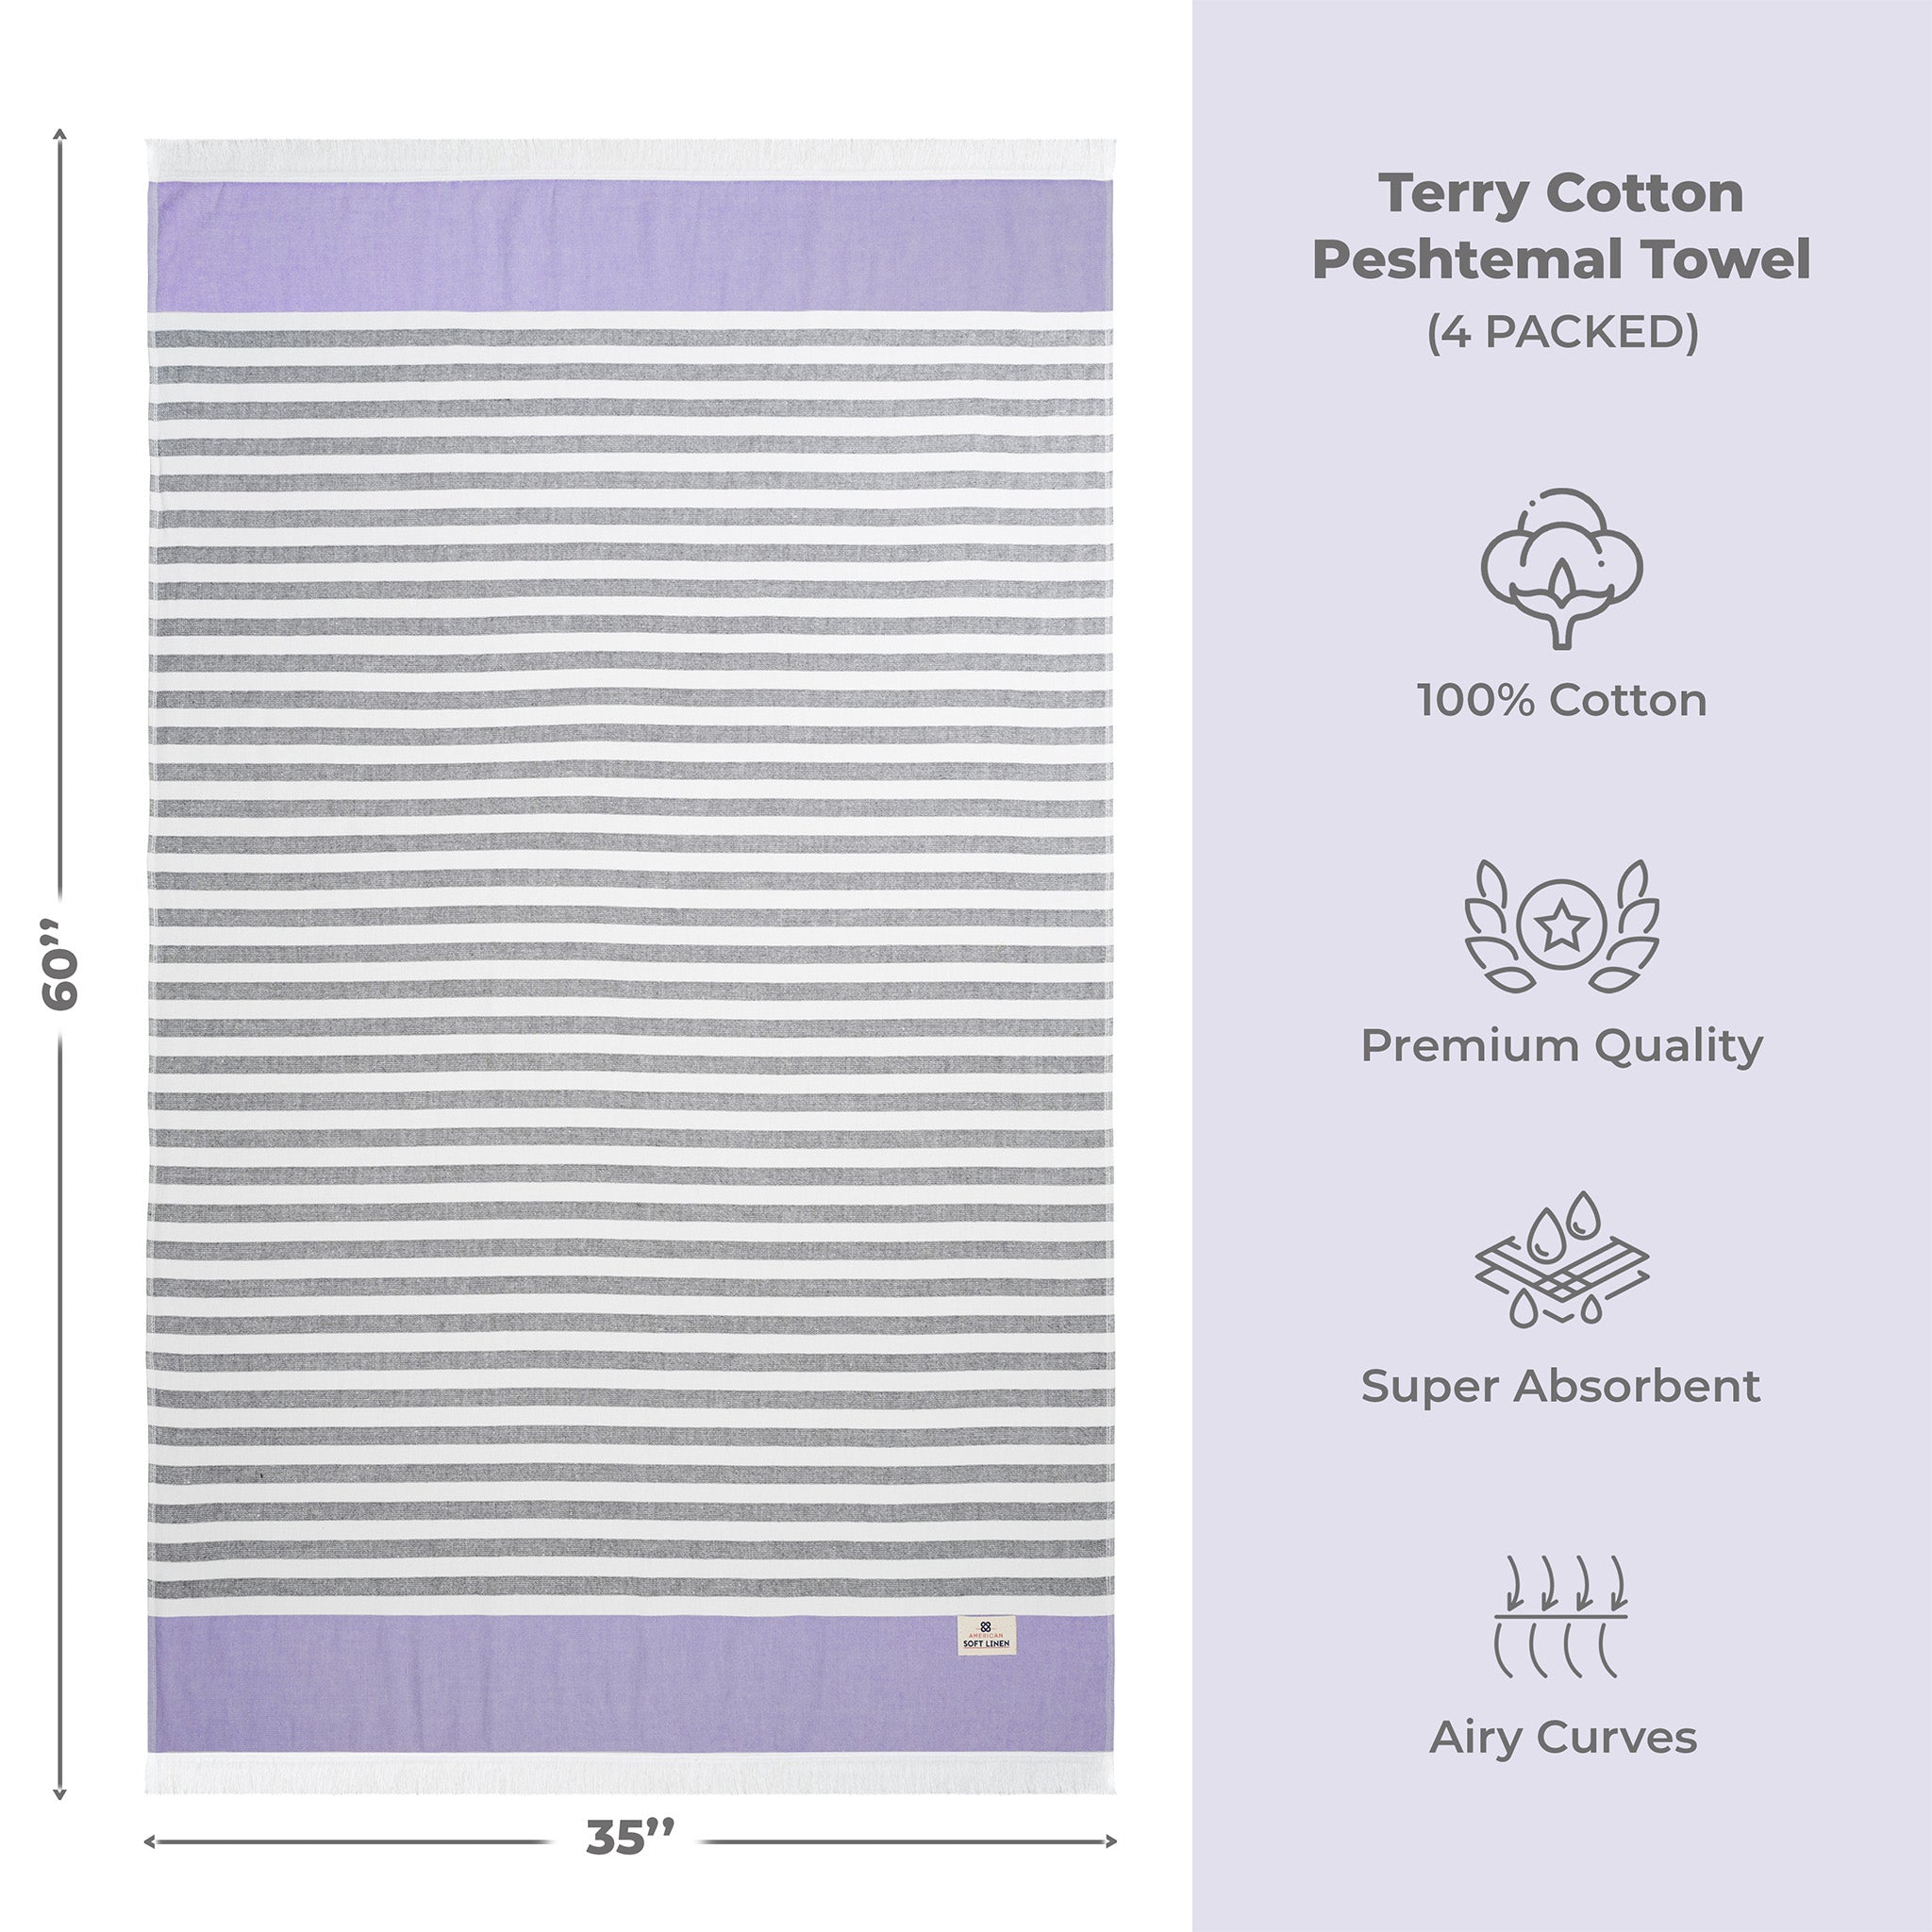 4 Packed 100% Cotton Terry Peshtemal & Beach Towel Purple-03